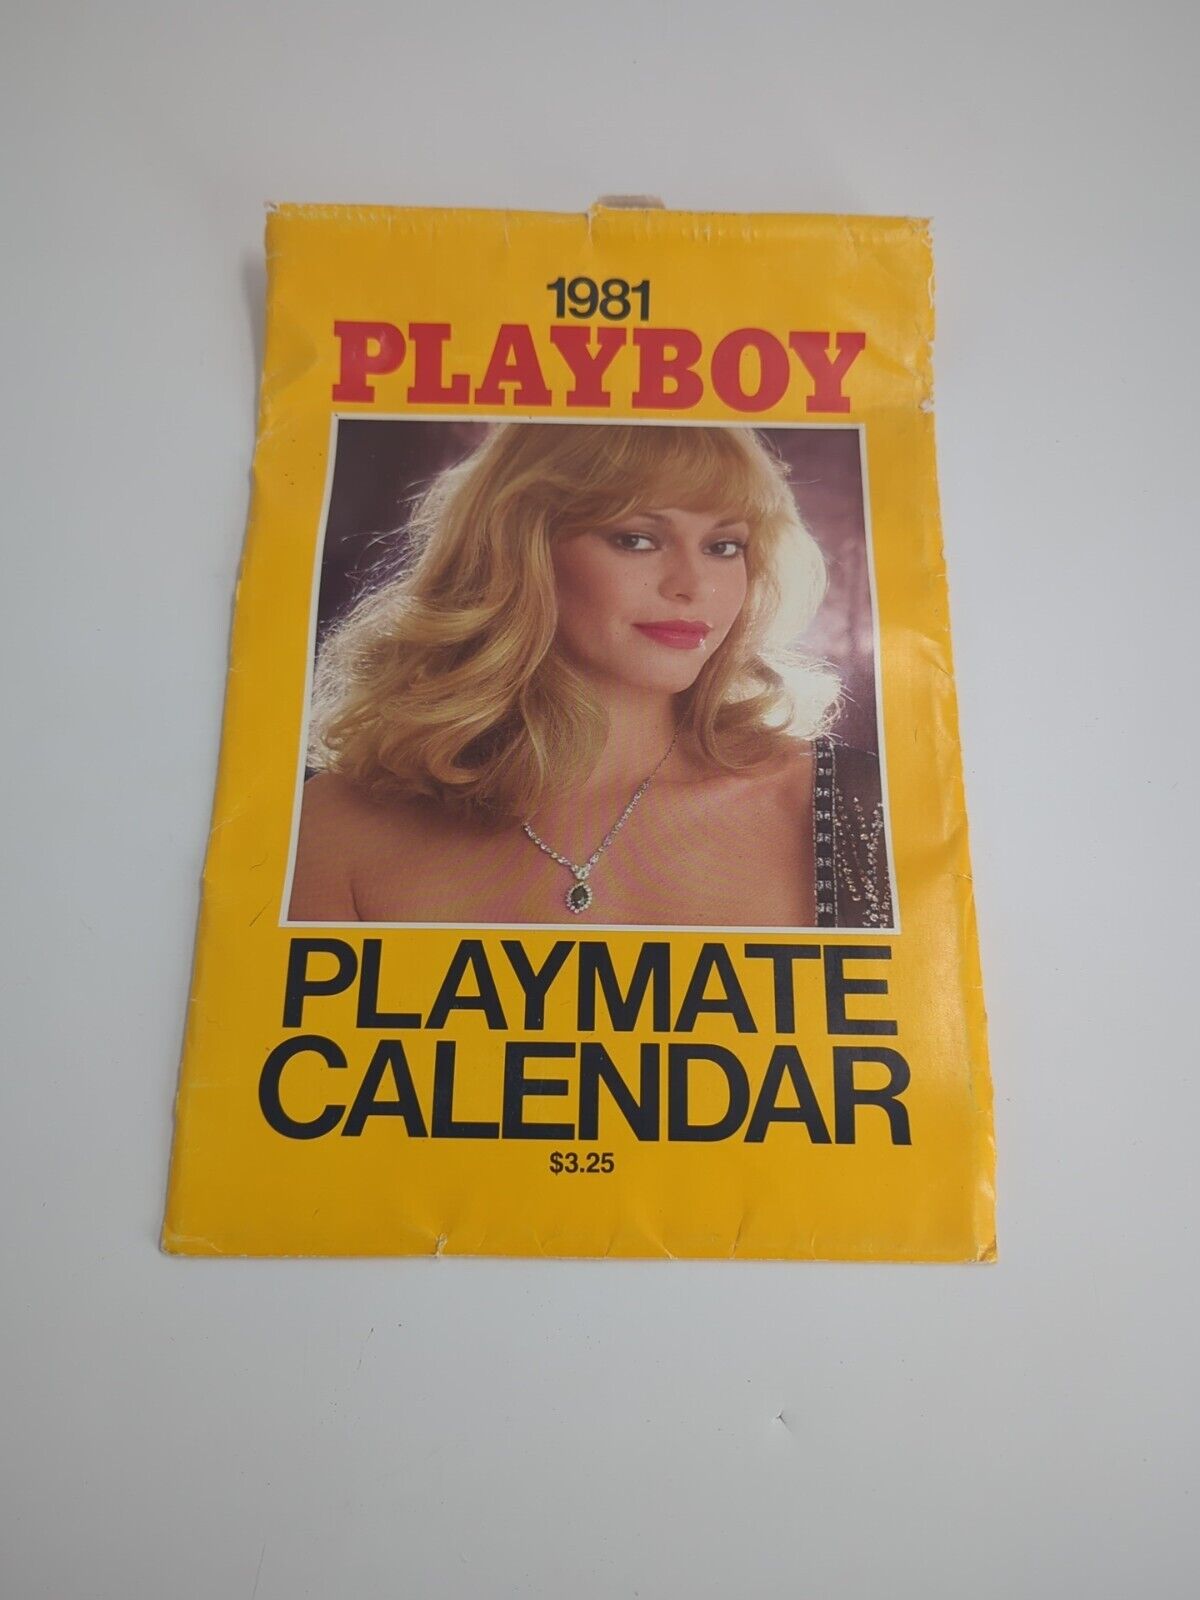 PLAYBOY PLAYMATE CALENDAR 1981 WITH ORIGINAL SLEEVE Vintage 